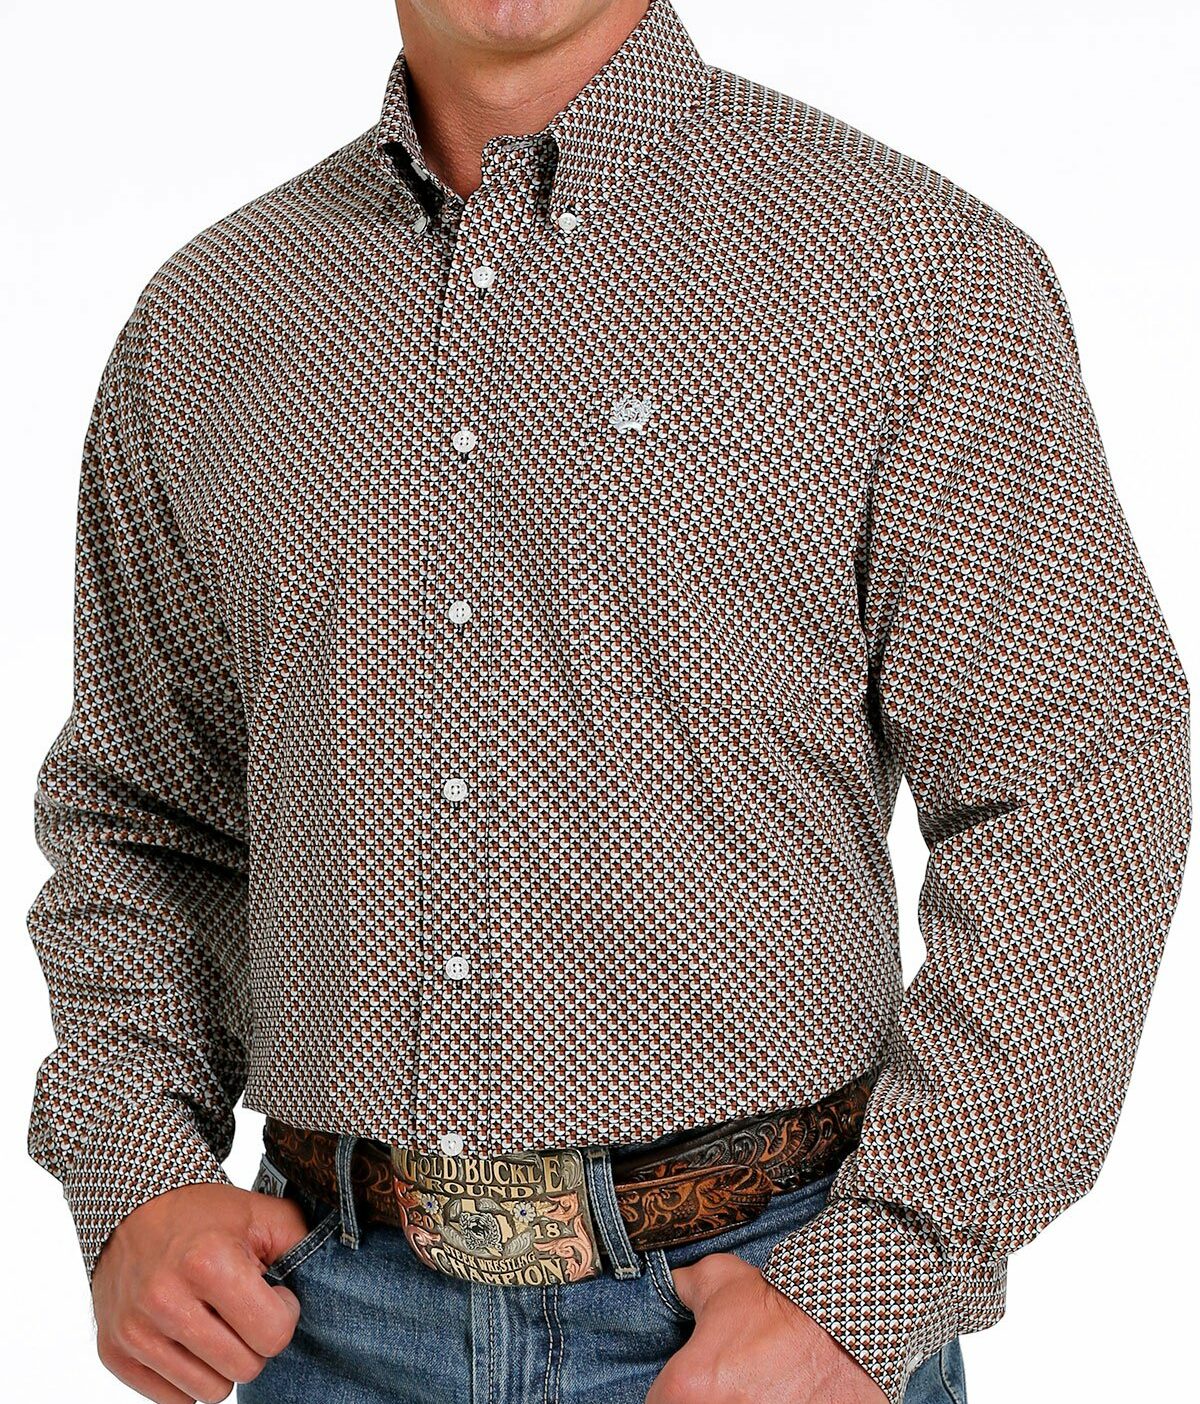 Wrangler Mens Cowboy Cut Slim Fit Jean 38Leg length - Donohues, City &  Country Gear